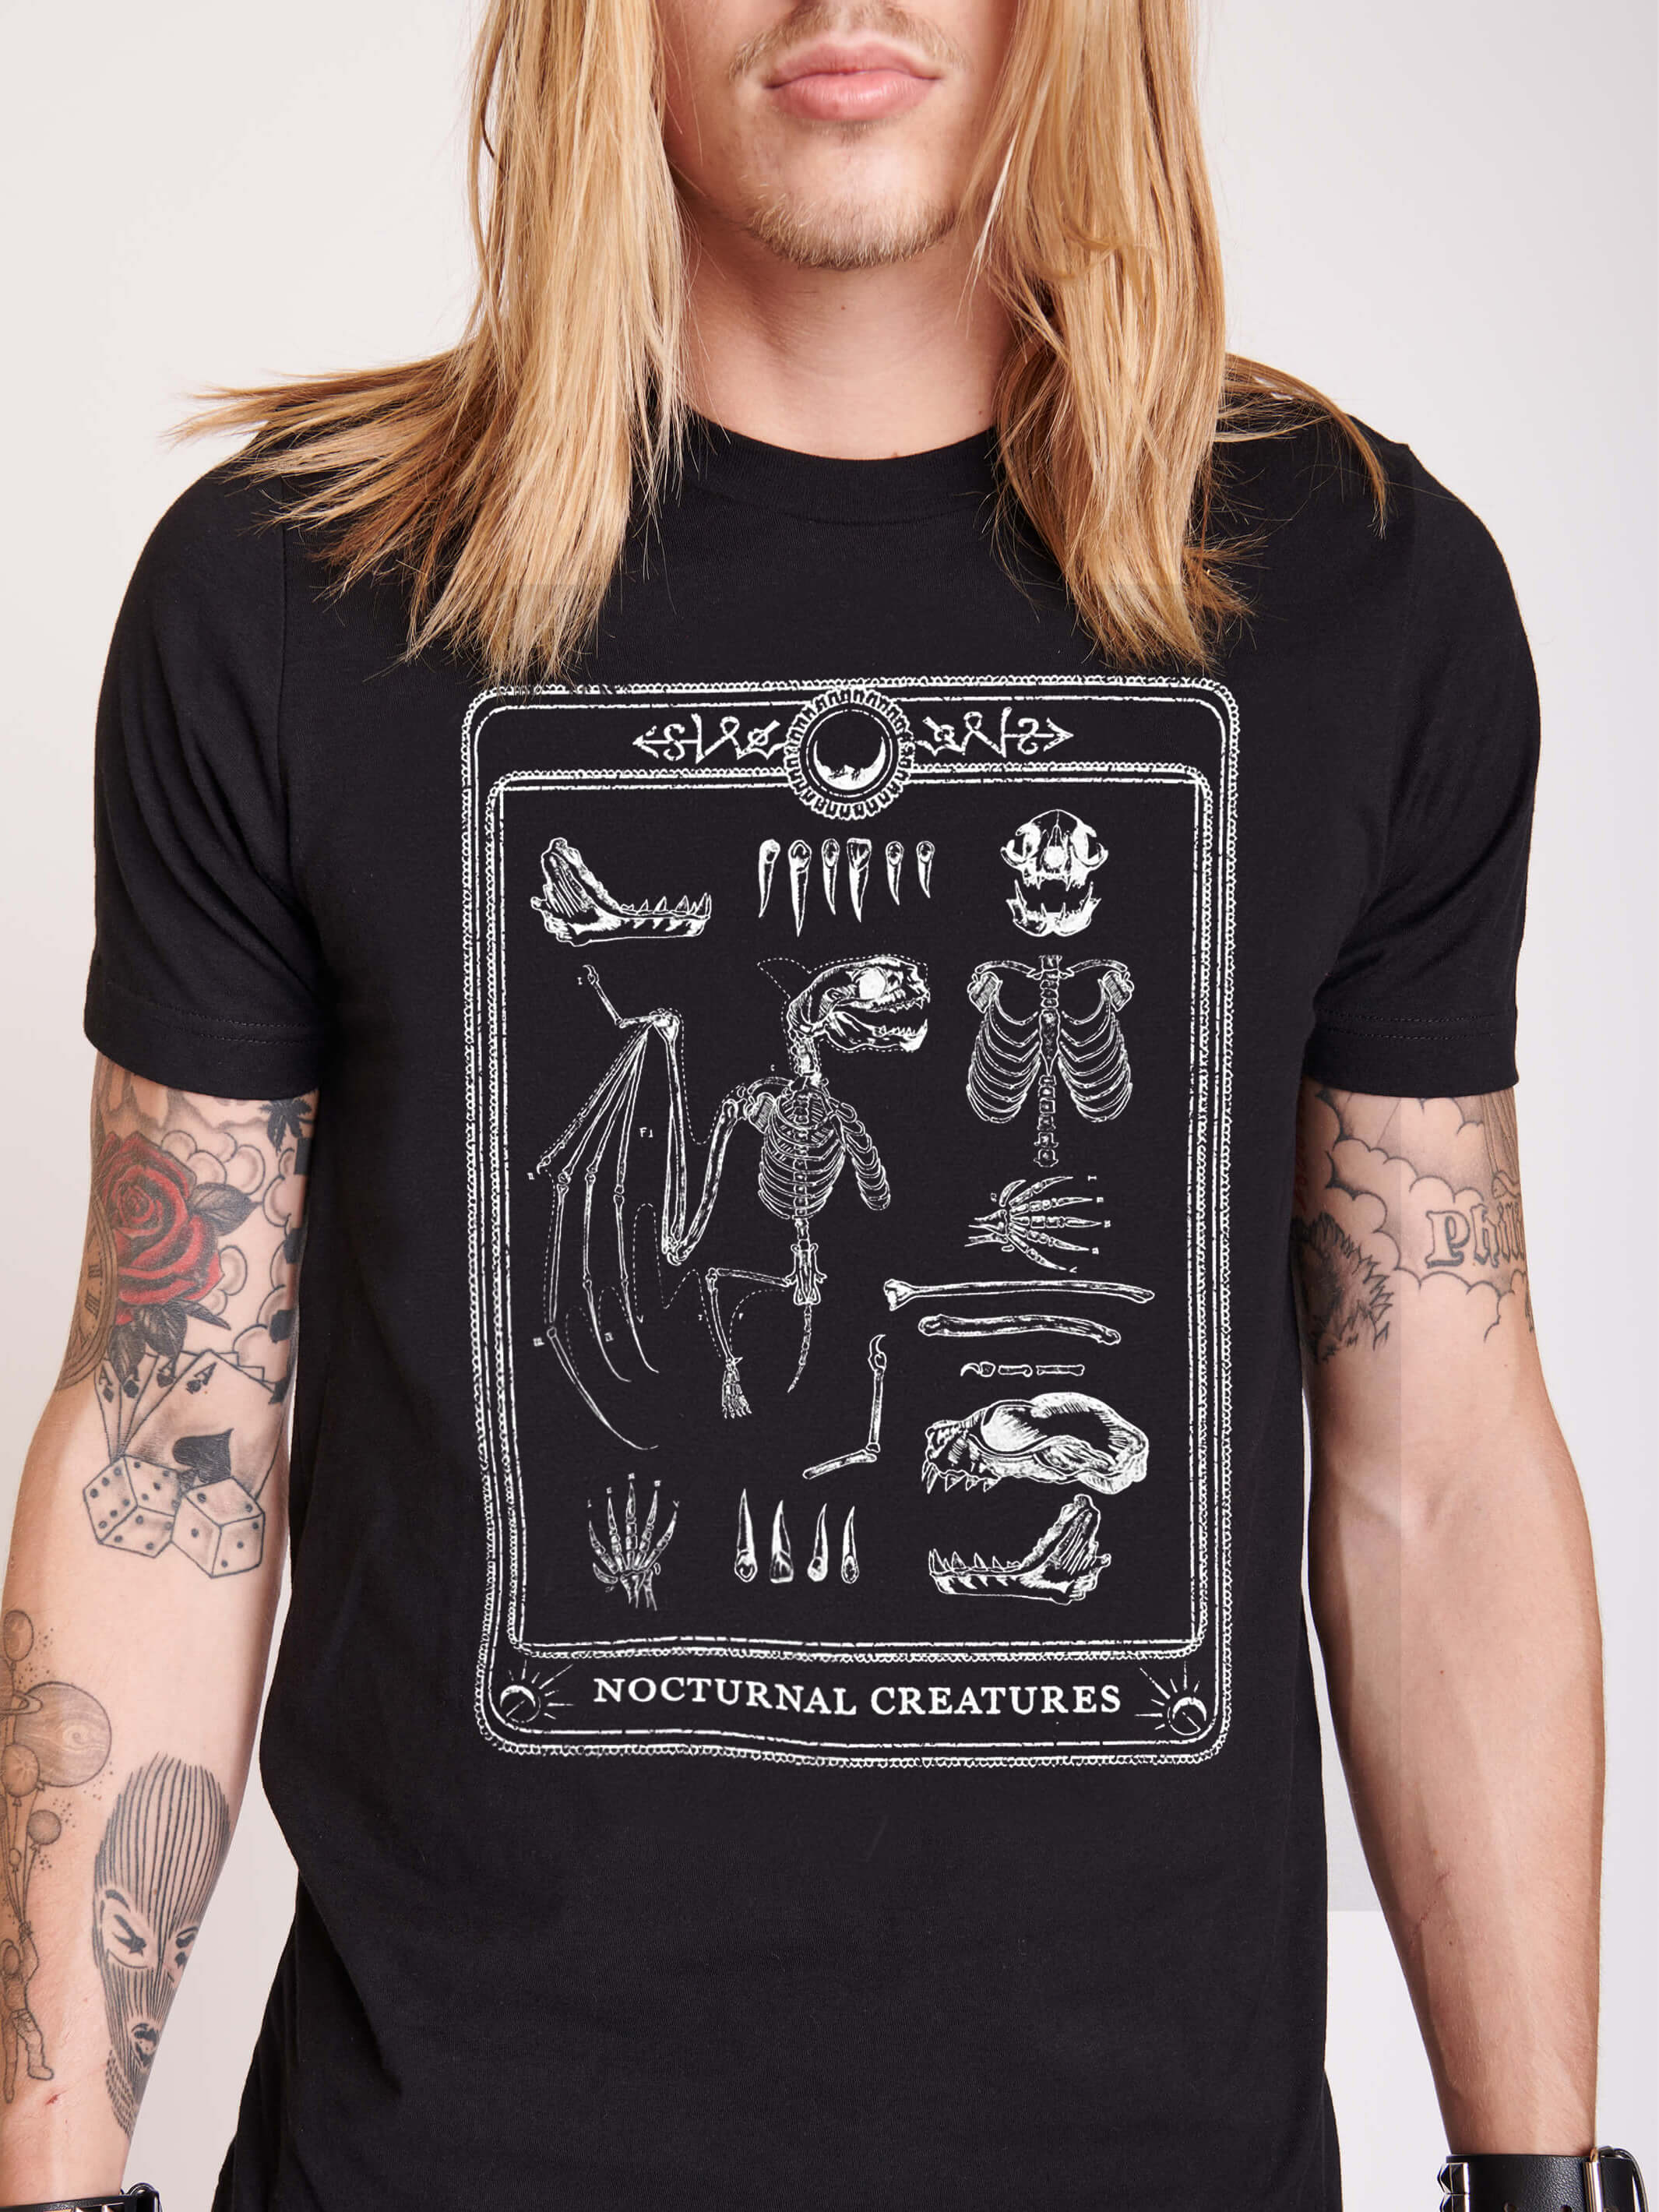 100% cotton unisex fit t-shirt featuring our custom noctural creatures artwork.